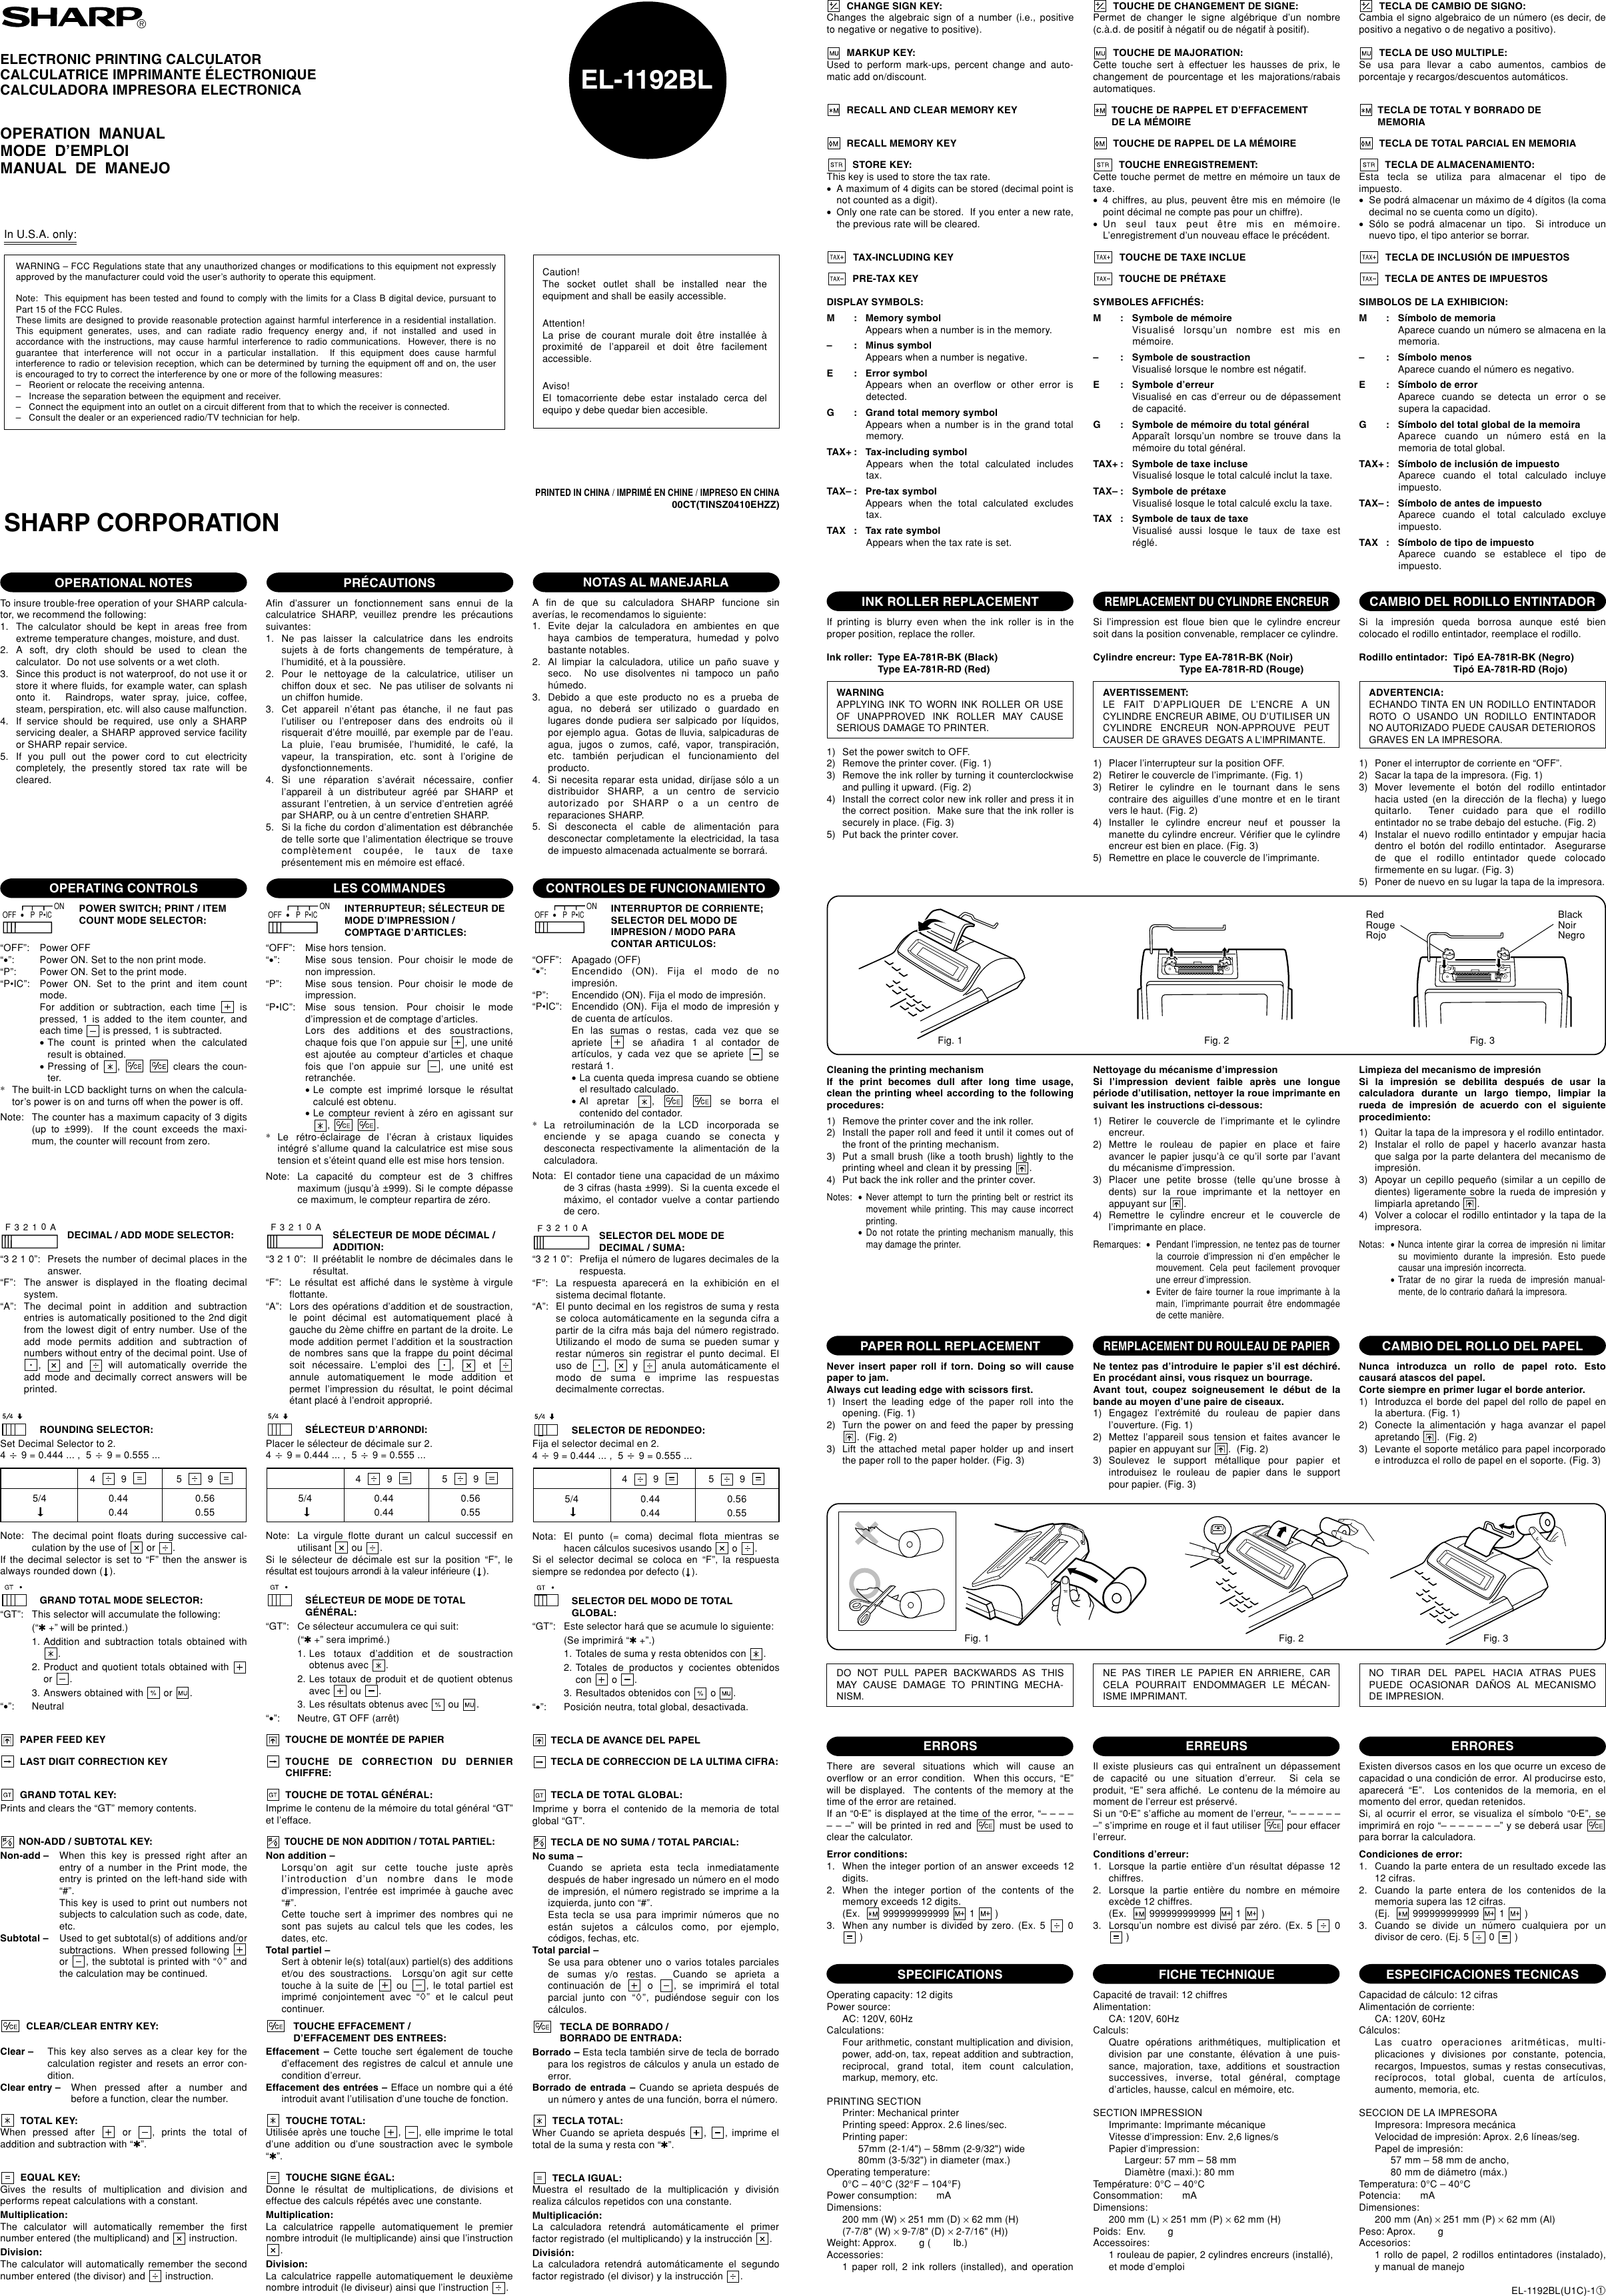 Page 1 of 2 - Sharp Sharp-El-1192Bl-Owners-Manual- EL-1192BL Operation Manual  Sharp-el-1192bl-owners-manual